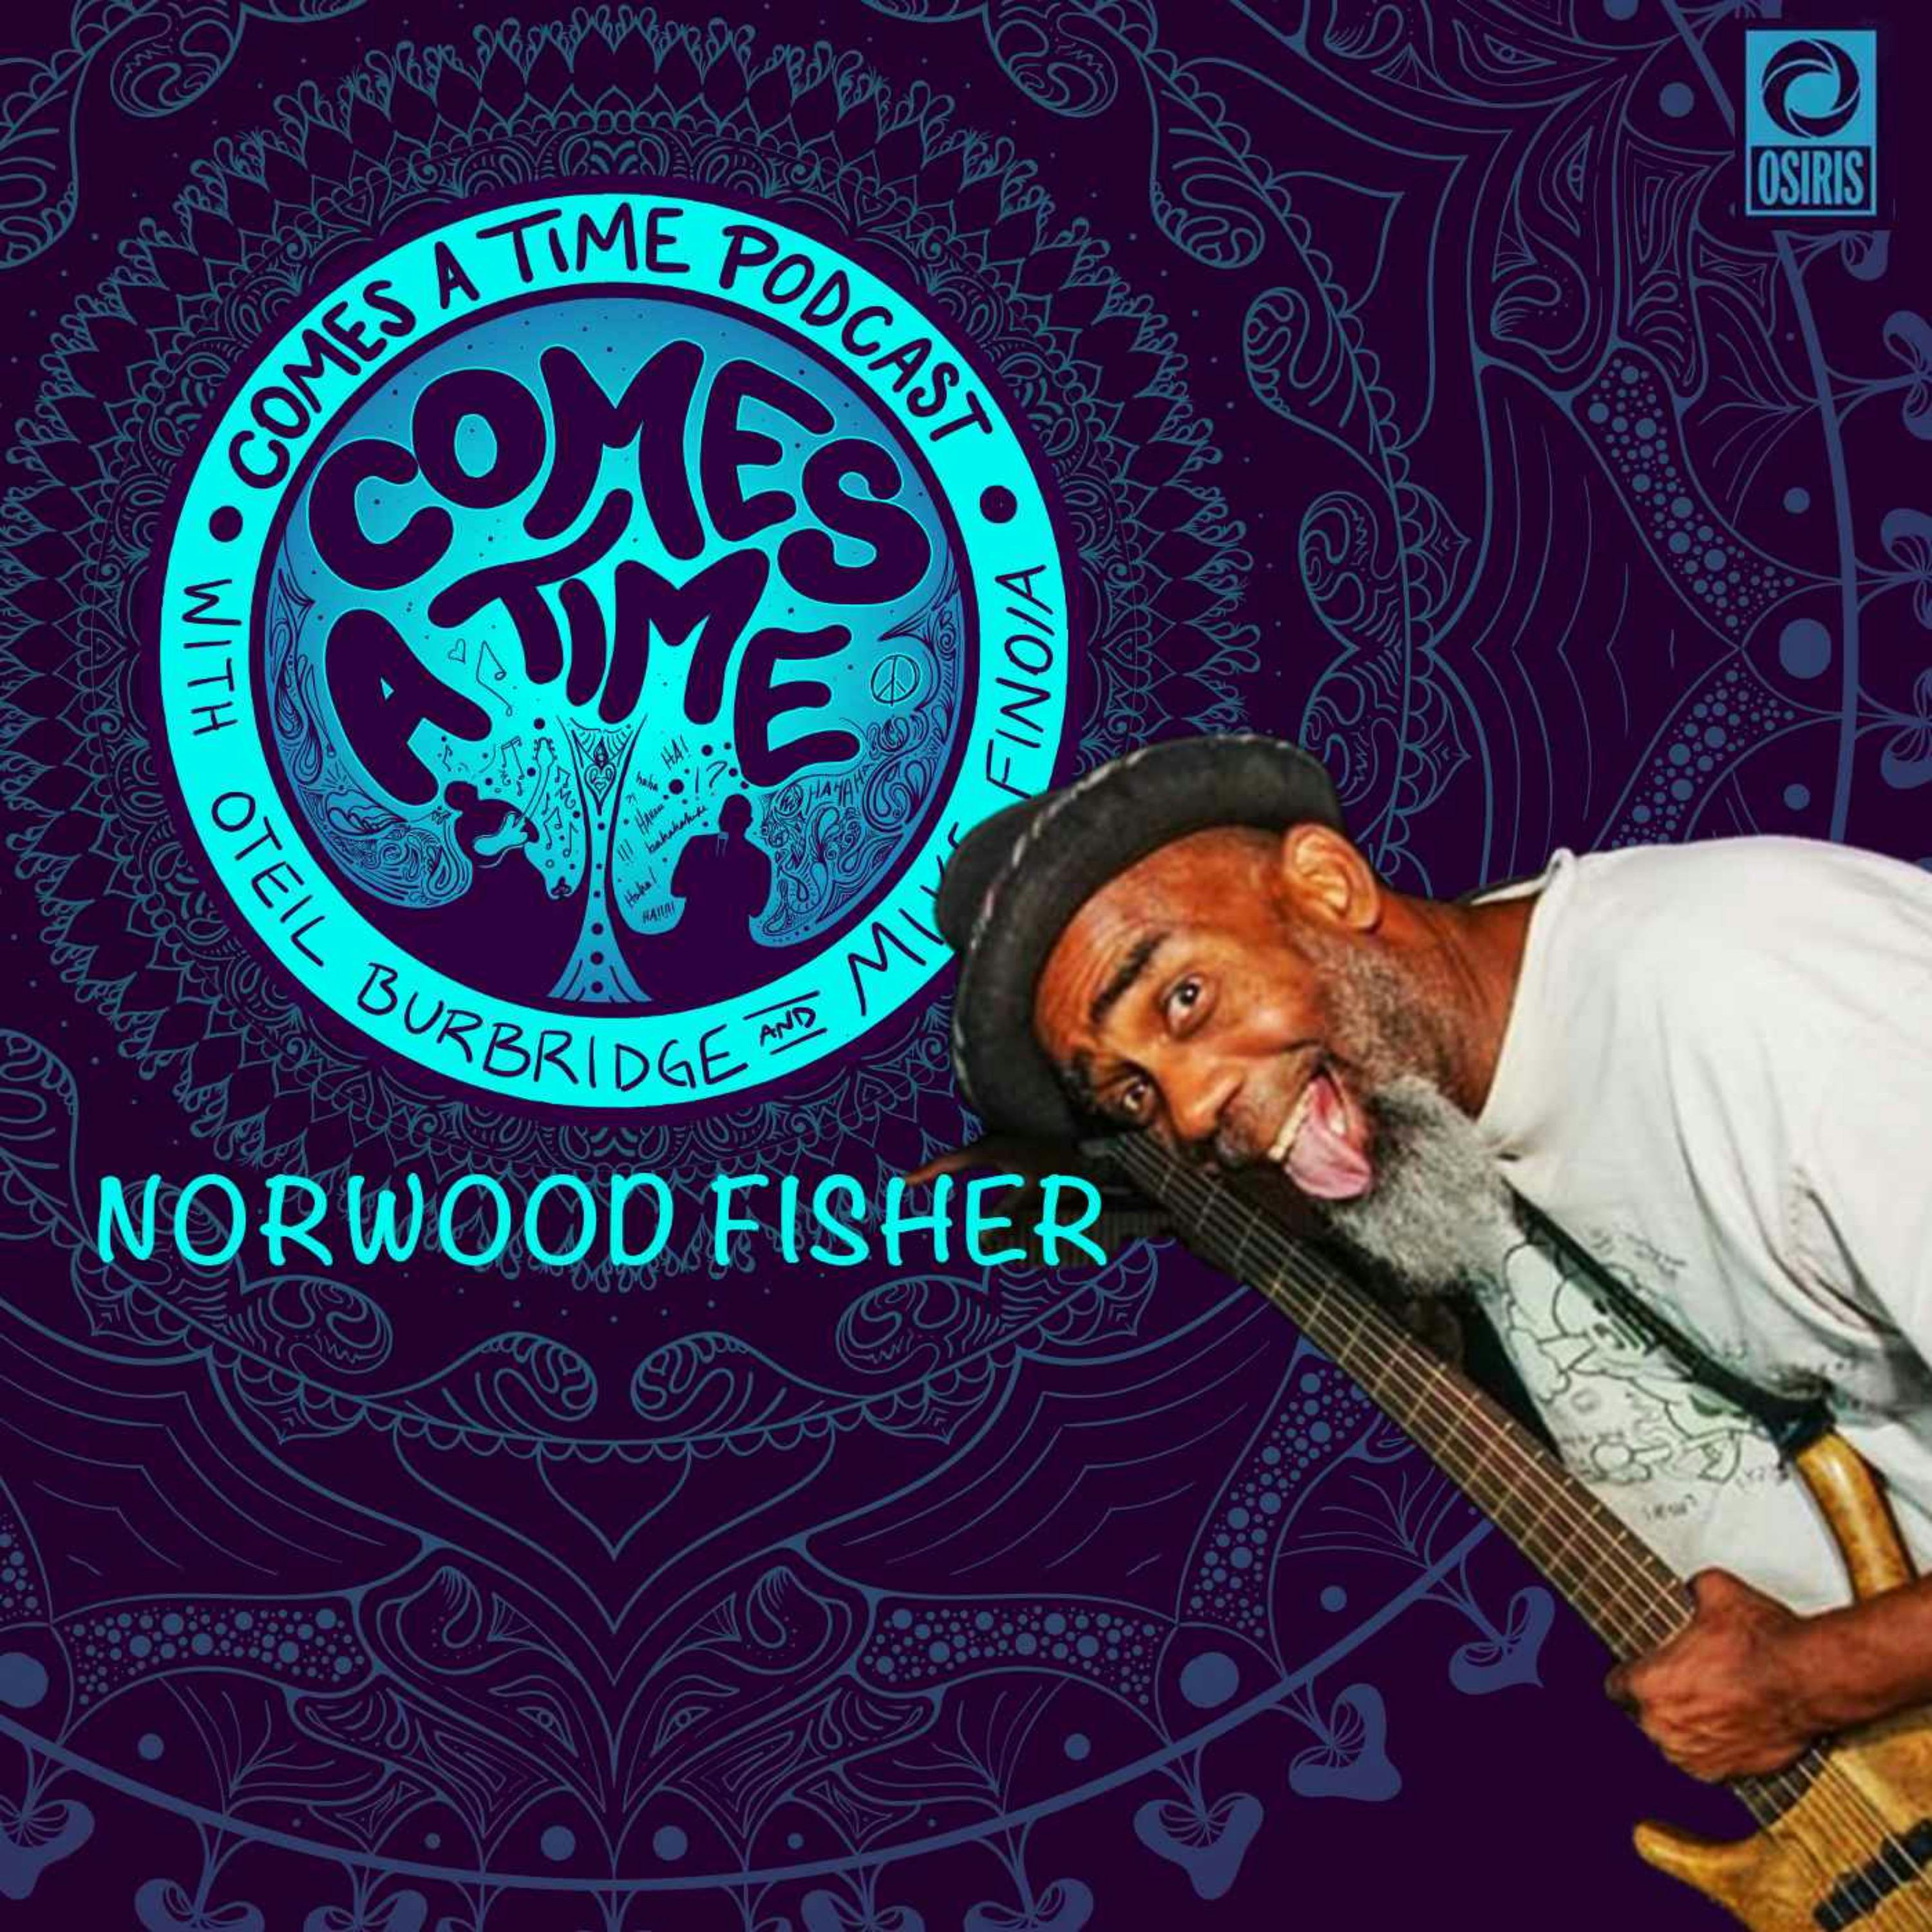 Norwood Fisher of Fishbone